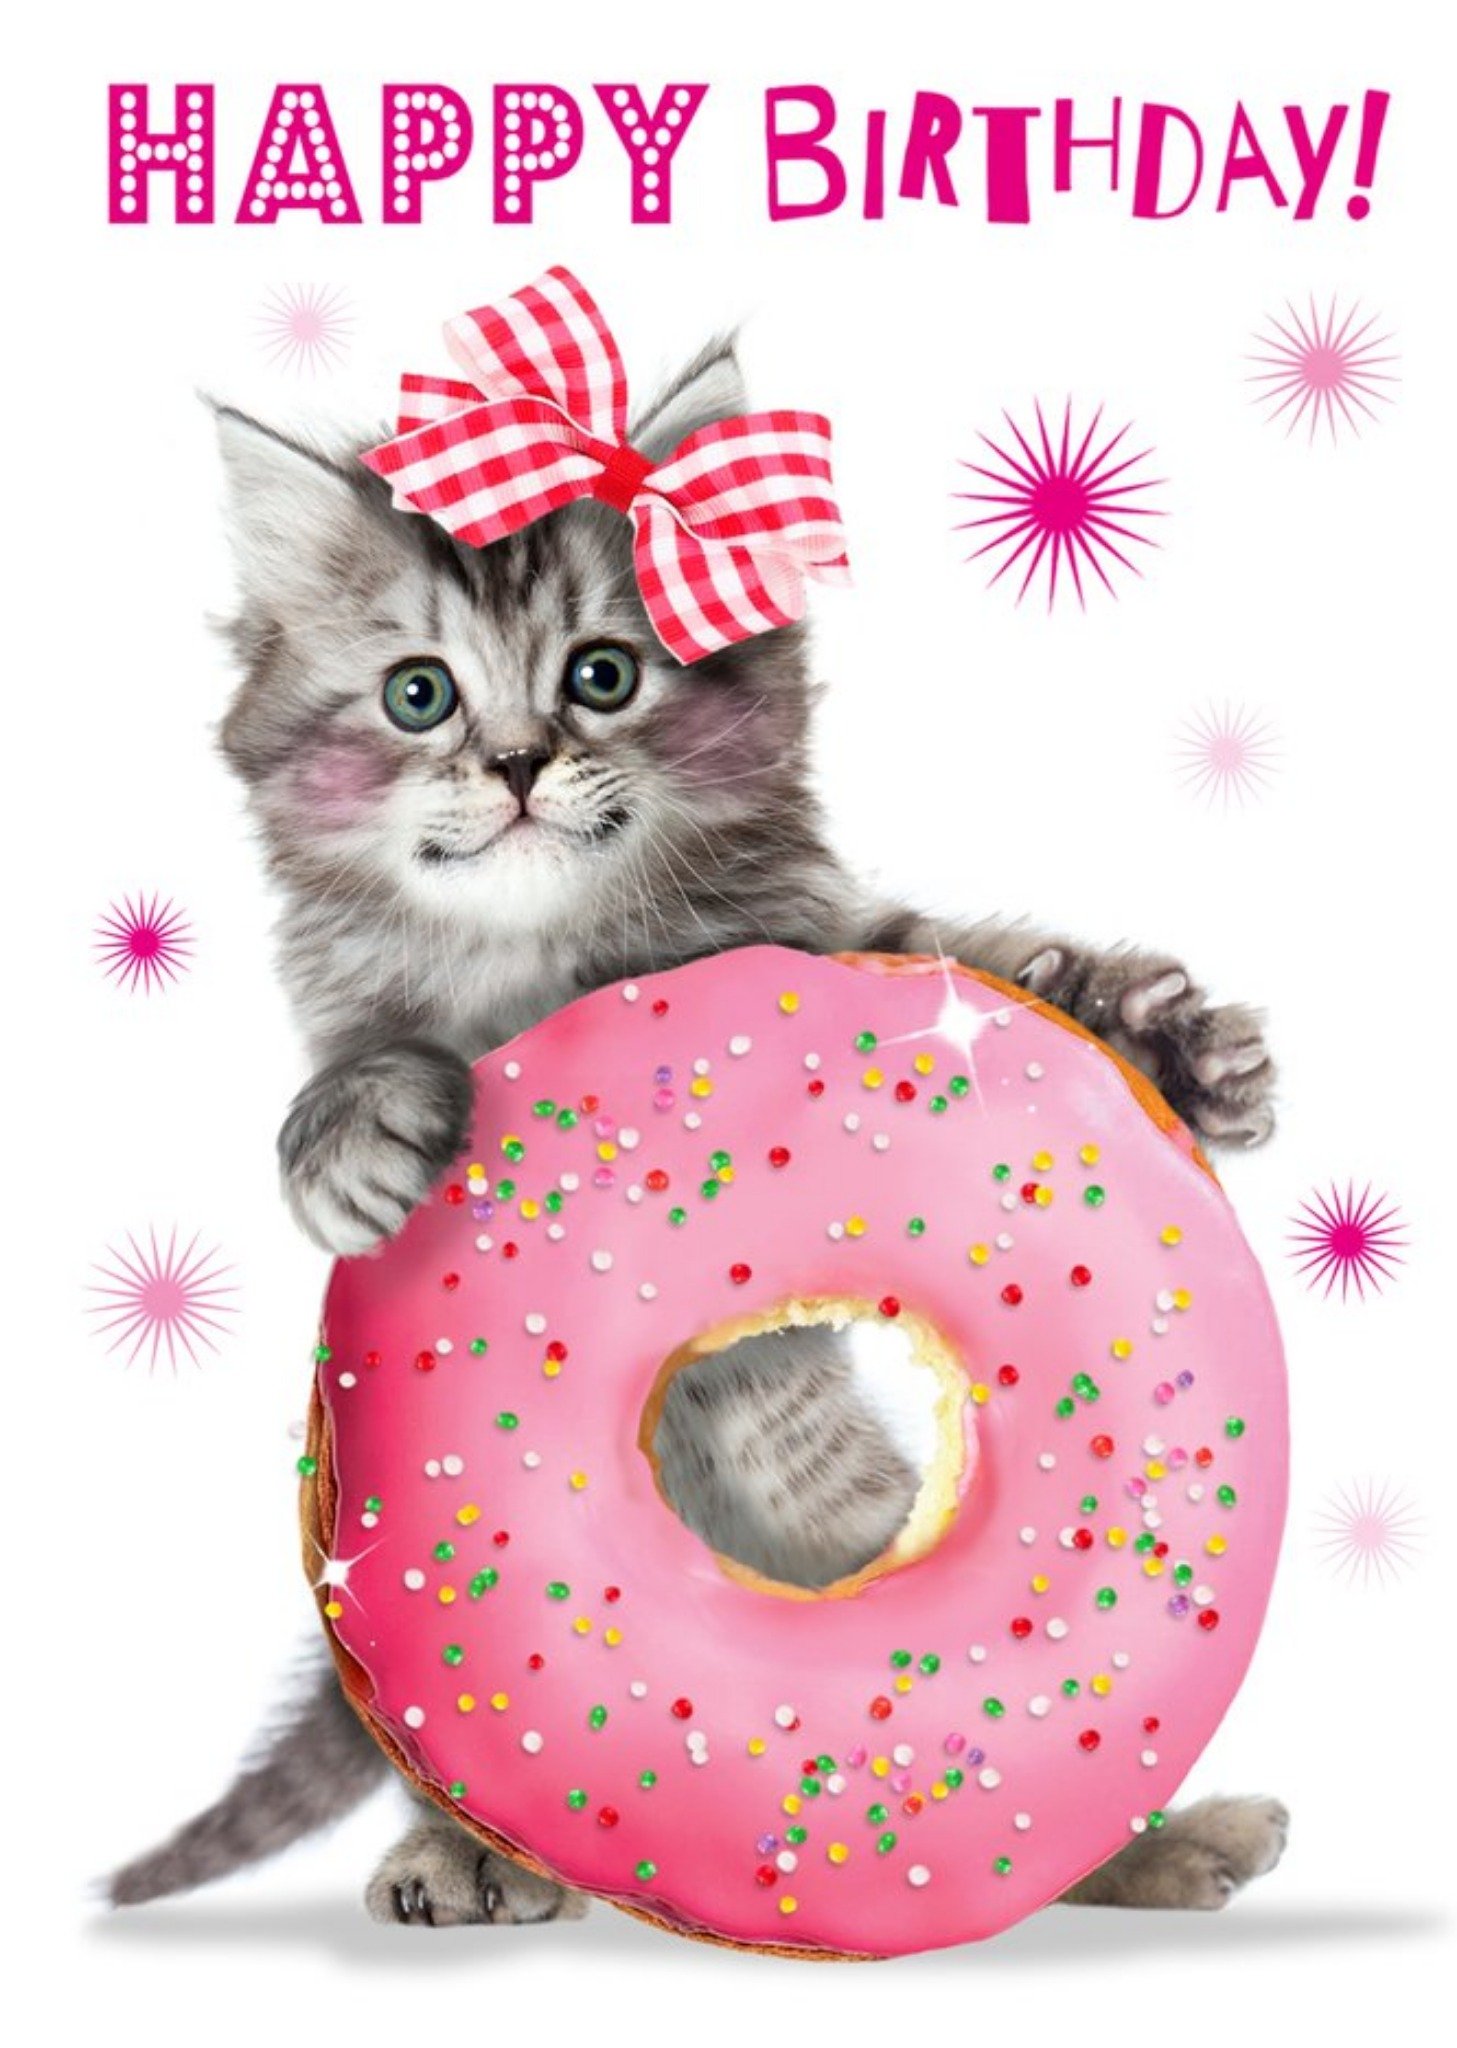 Moonpig Cute Kitten With Pink Doughnut Birthday Card, Large